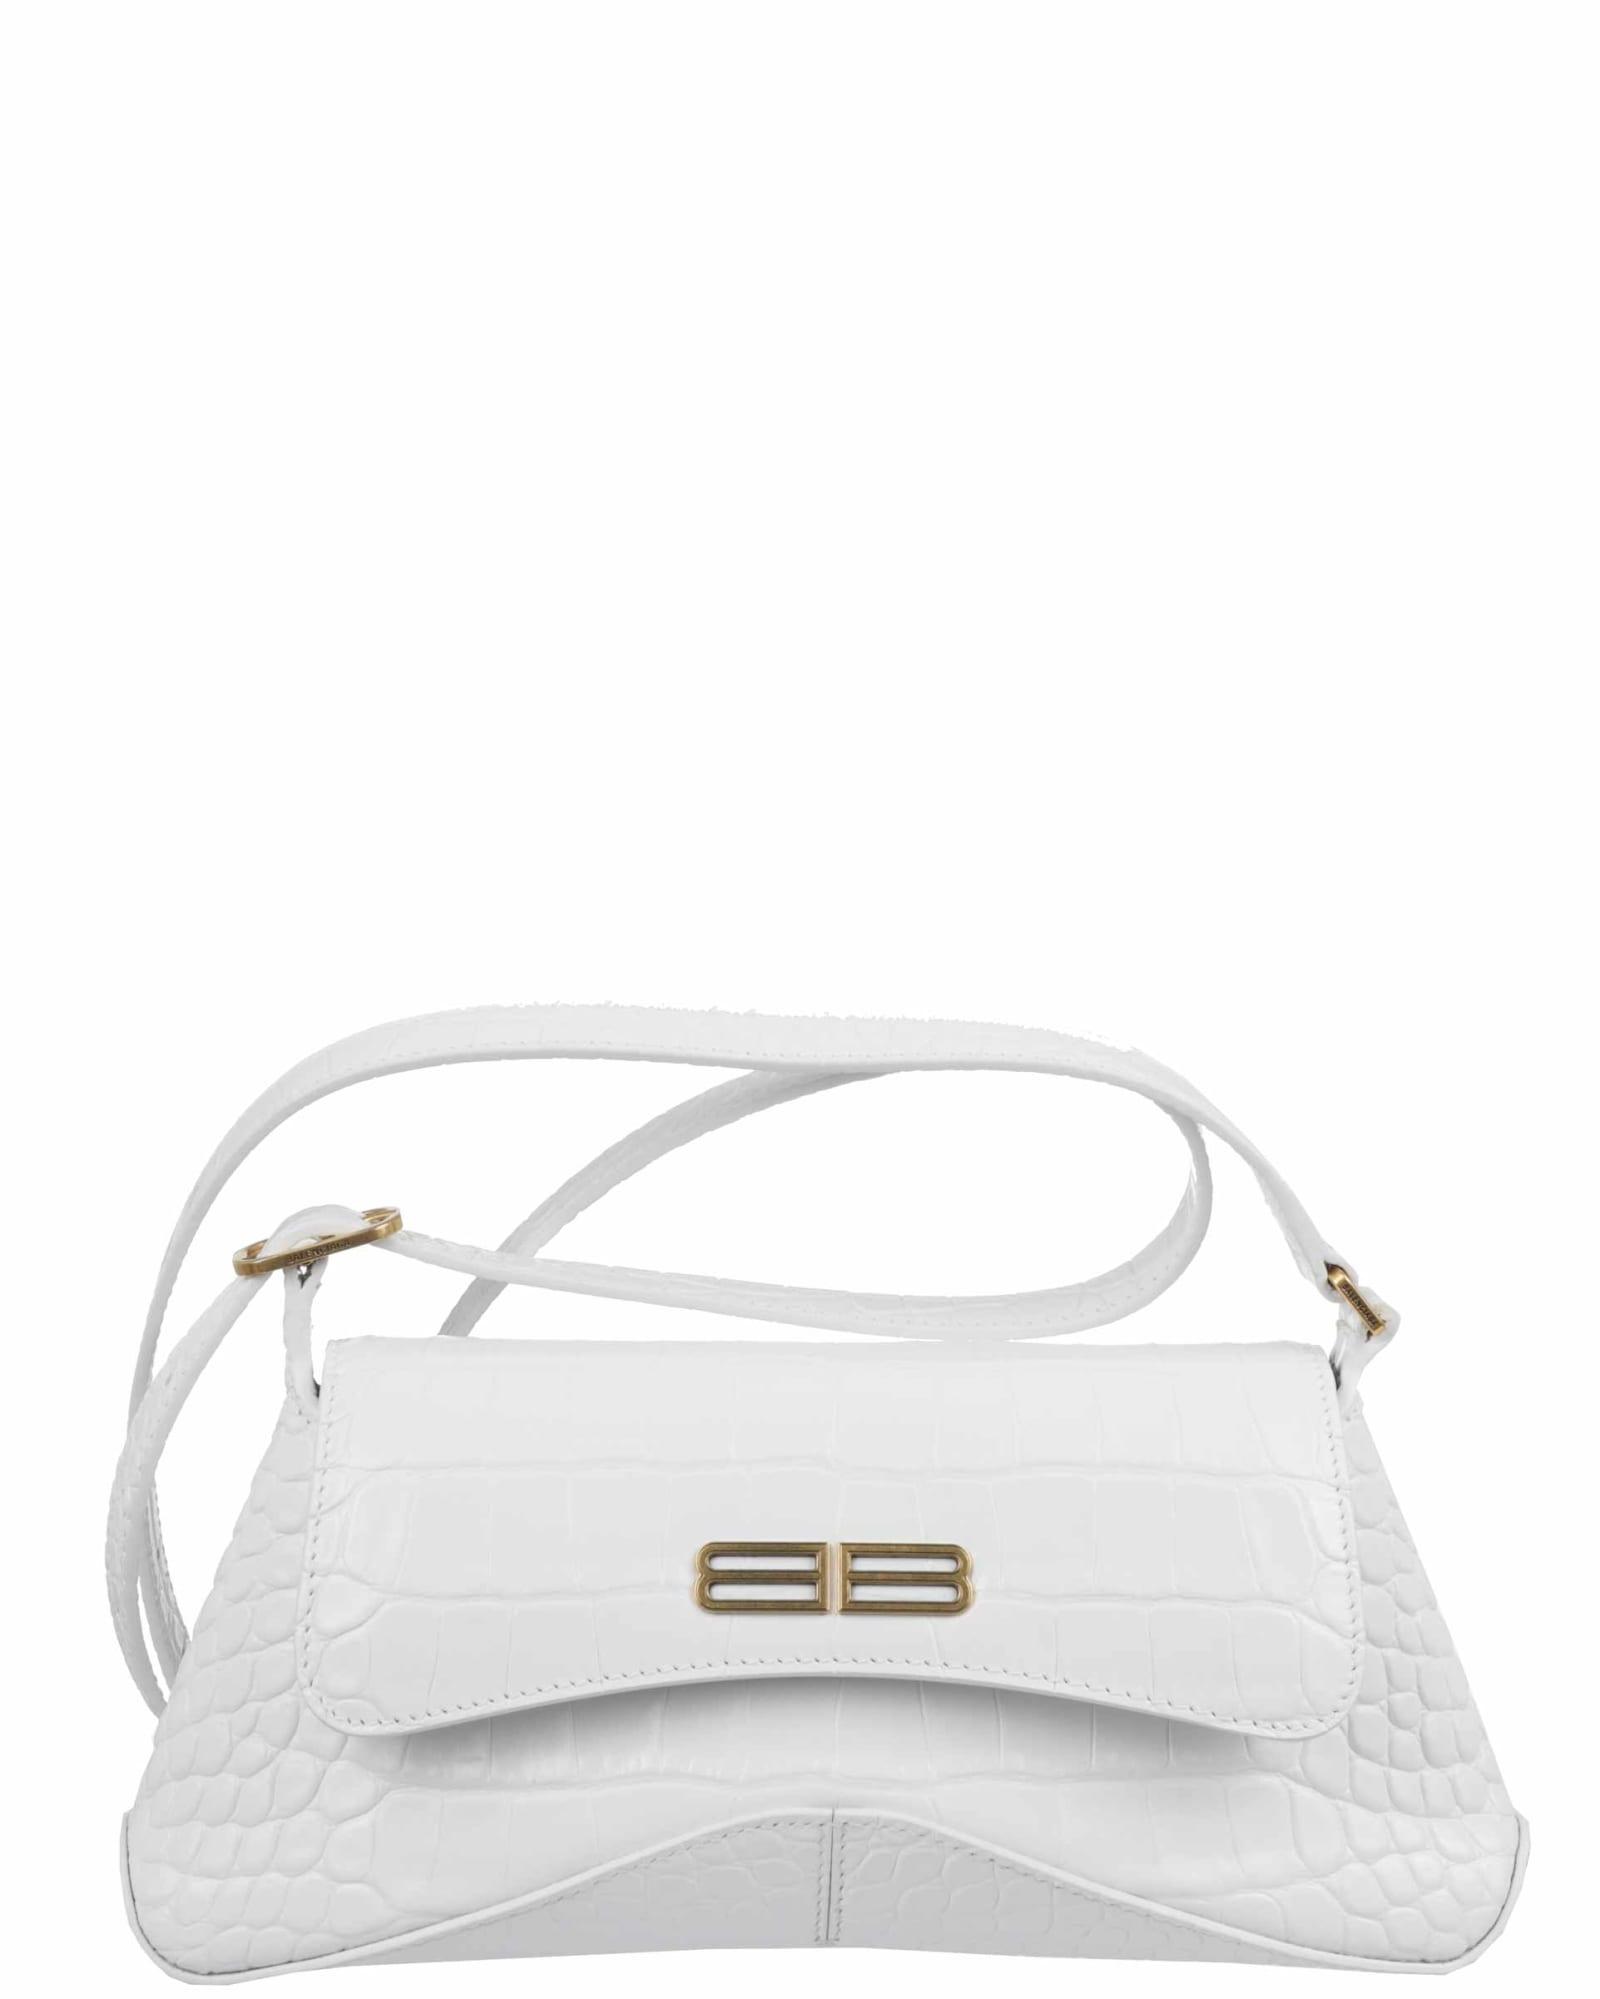 Balenciaga Leather Xx Flap S Bag in White - Save 47% | Lyst